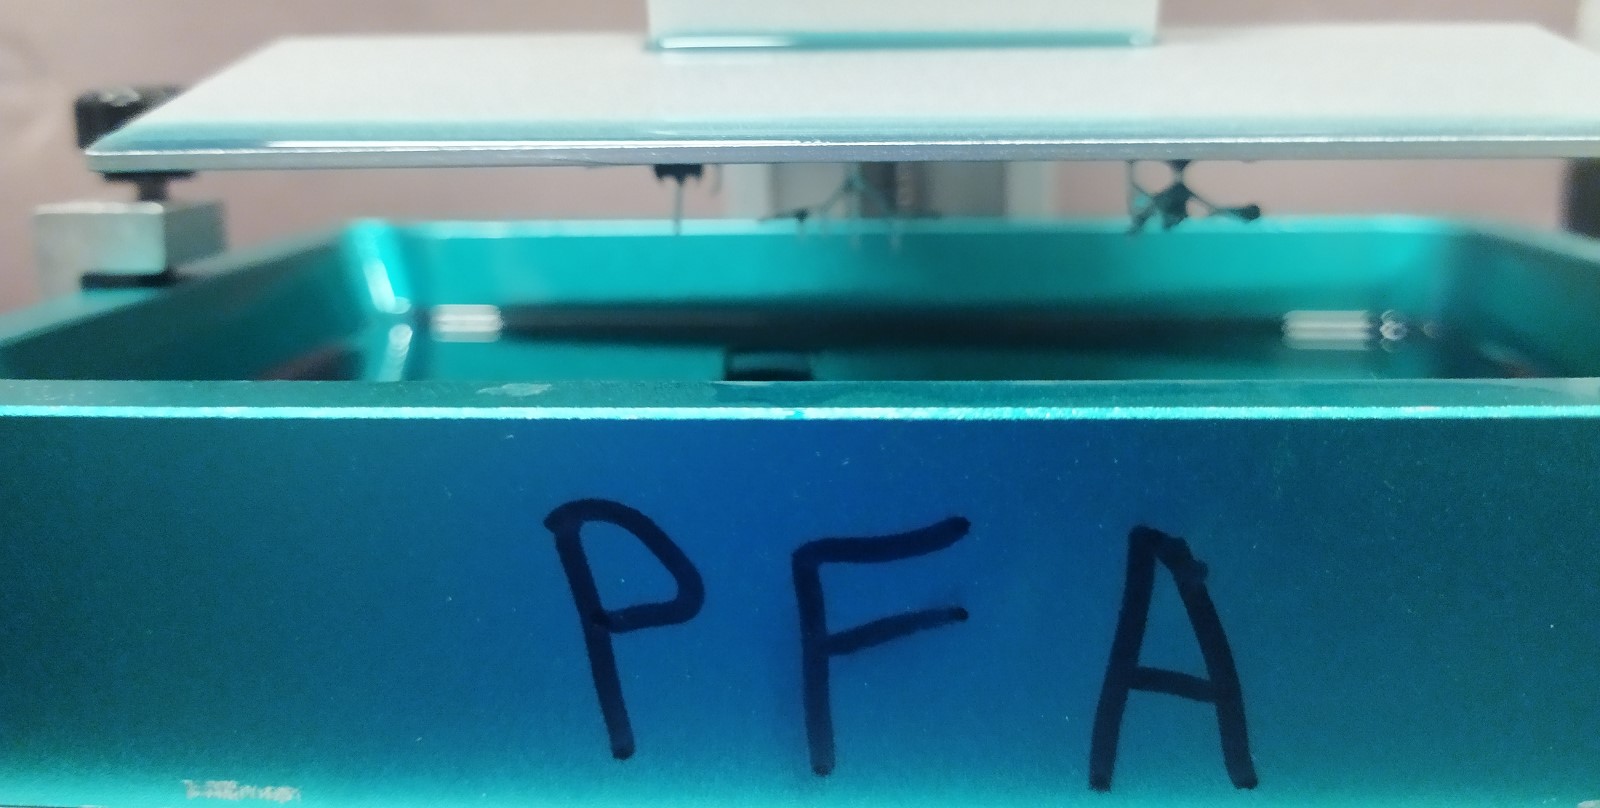 liqcreate 3d-printing FEP vs PFA nFEP film foil 0,1mm resin tough strong elastic jewelry dental flex